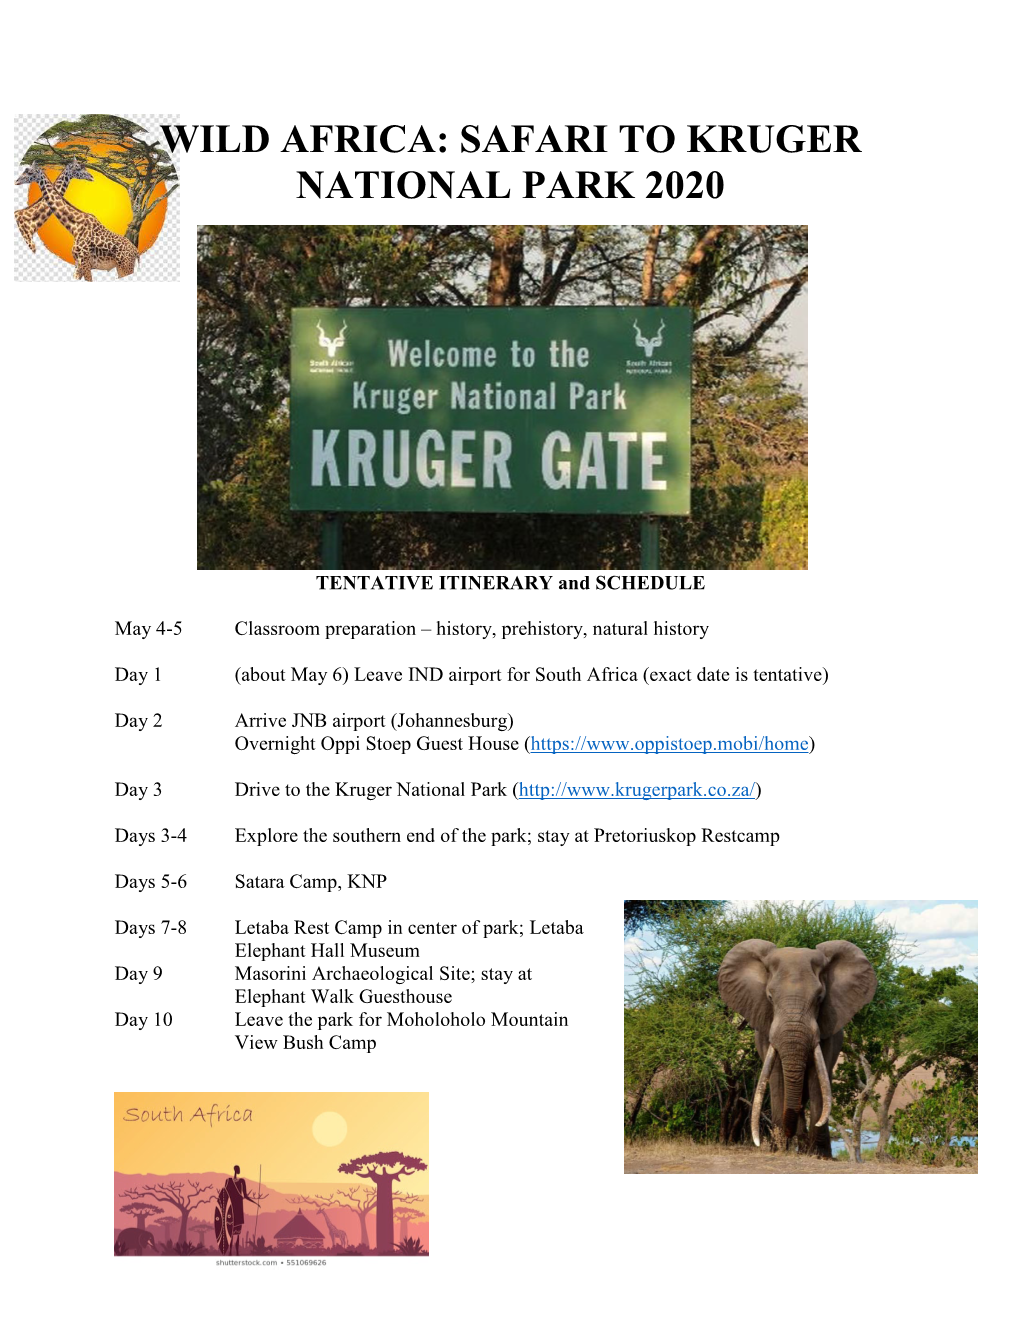 Wild Africa: Safari to Kruger National Park 2020